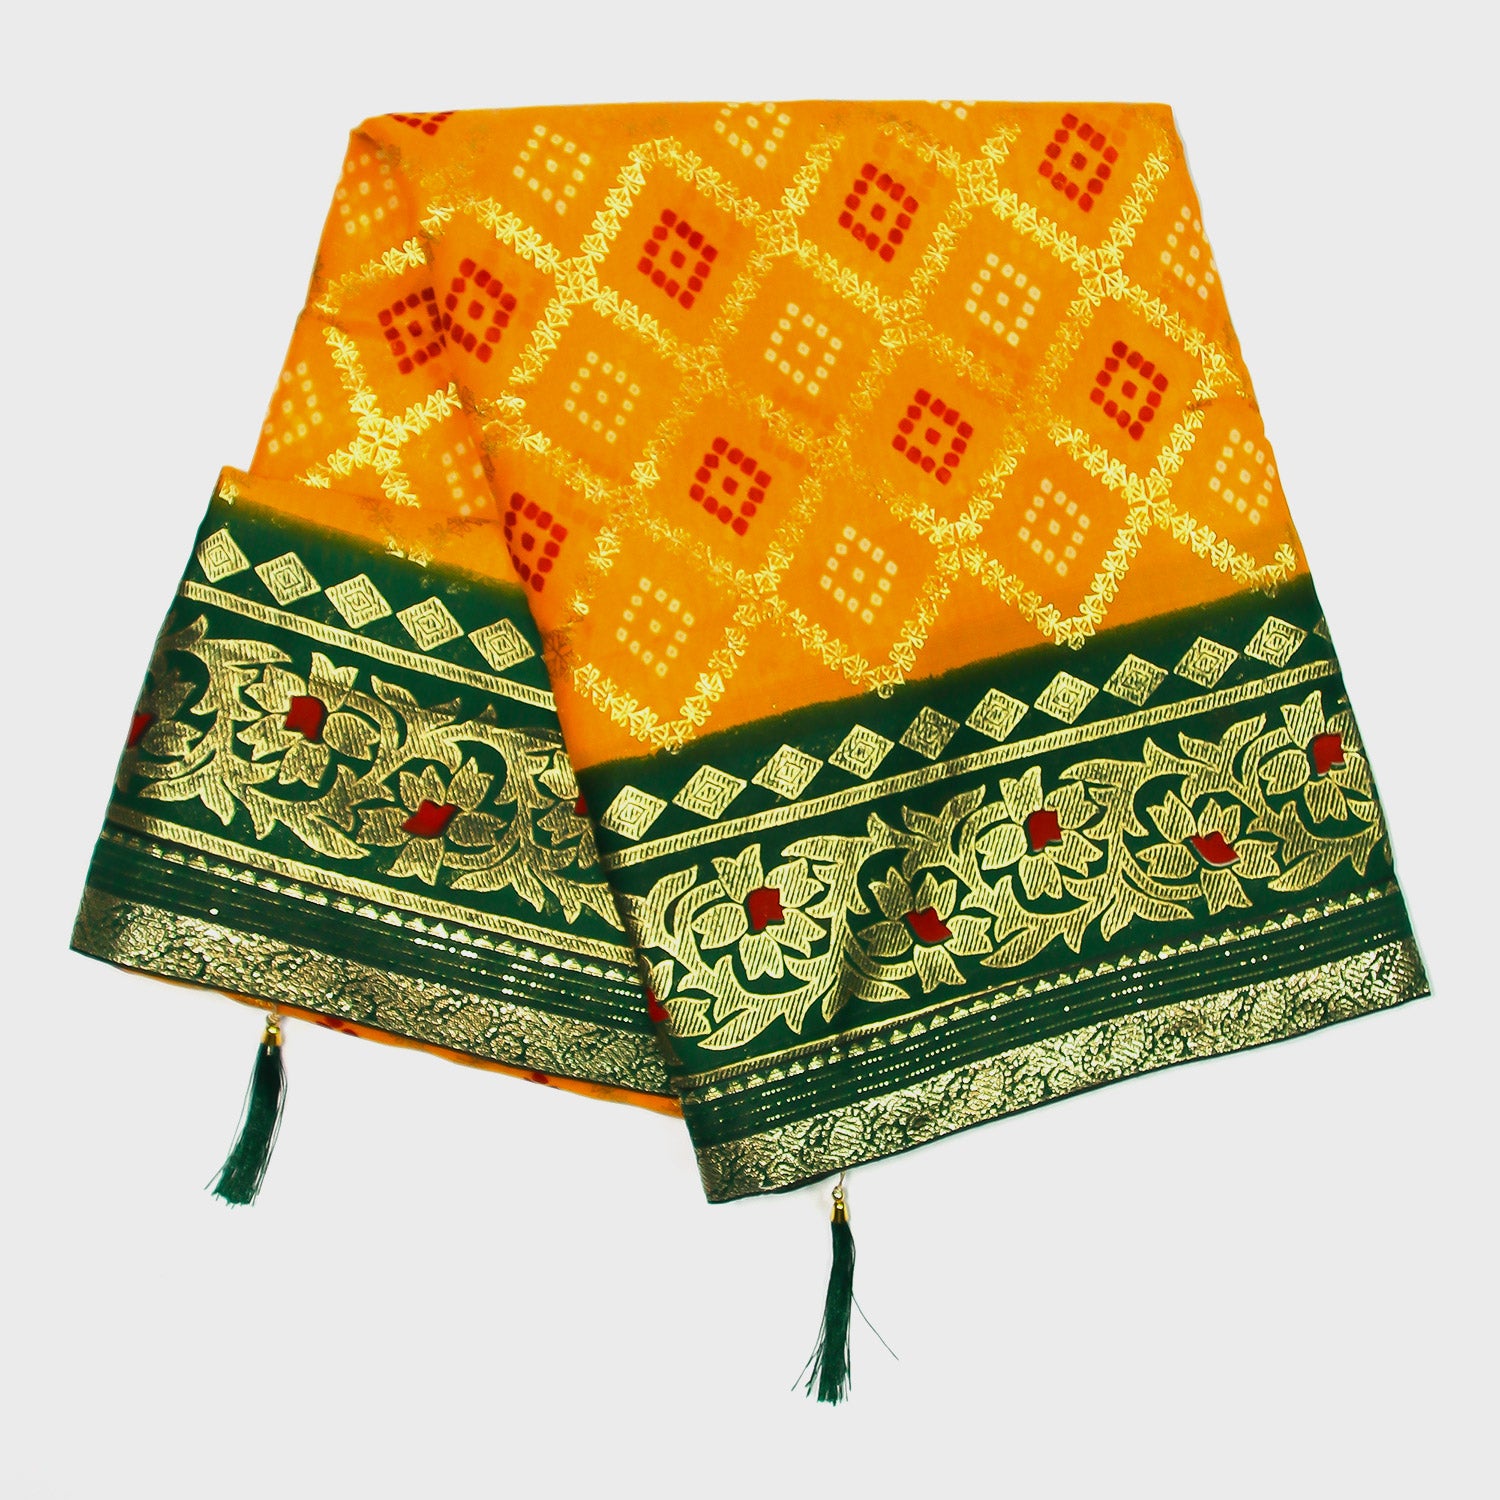 Yellow Dola Badhani Saree, Synthetic Saree, Unstitched Blouse, Lightweight Ethnic Wear, Traditional Elegance, Bloomaya Fashion, Festive Attire, Wedding Saree, Modern Ethnic Fashion, Indian Traditional Wear.